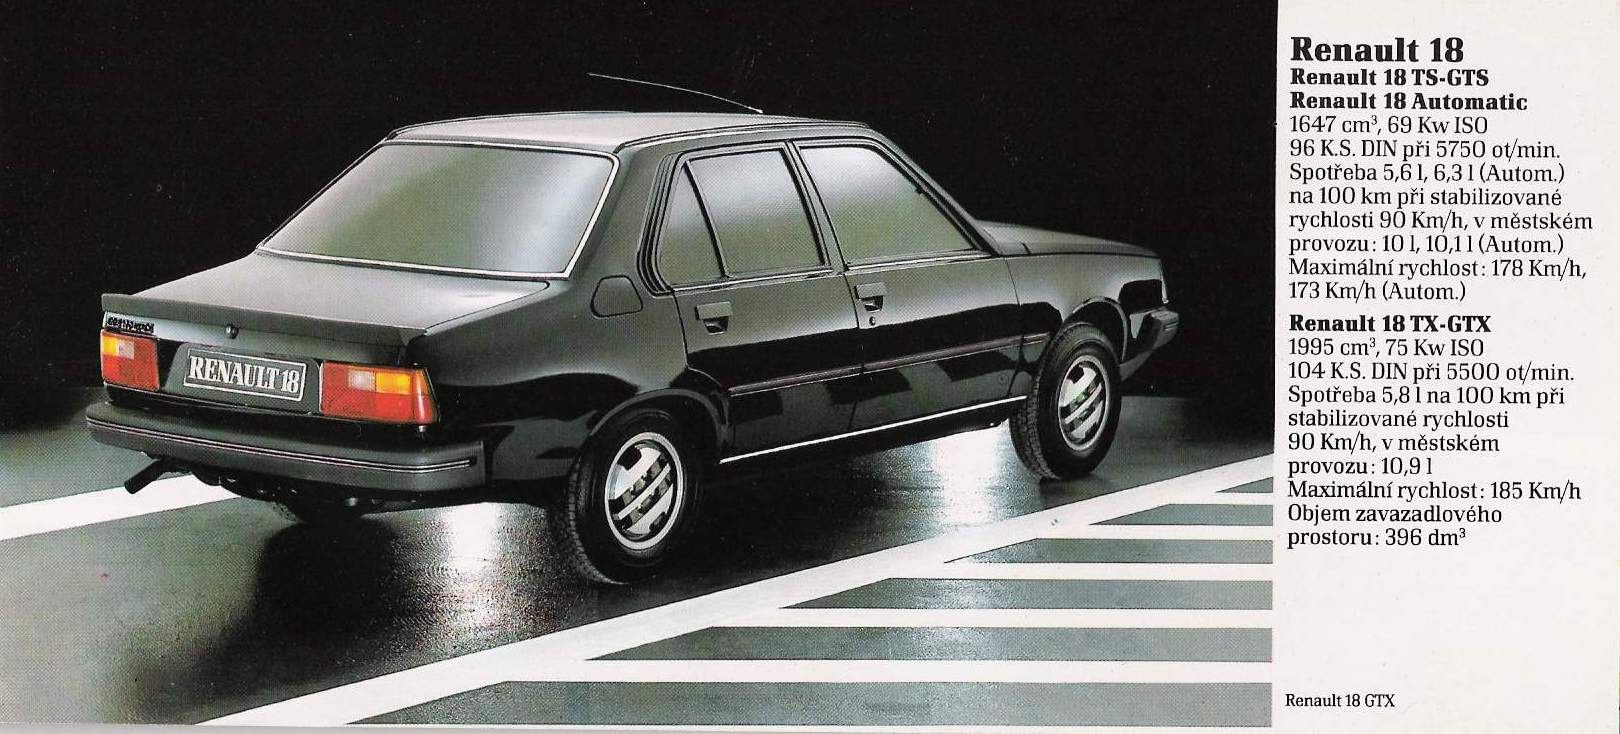 Renault 18 GTX